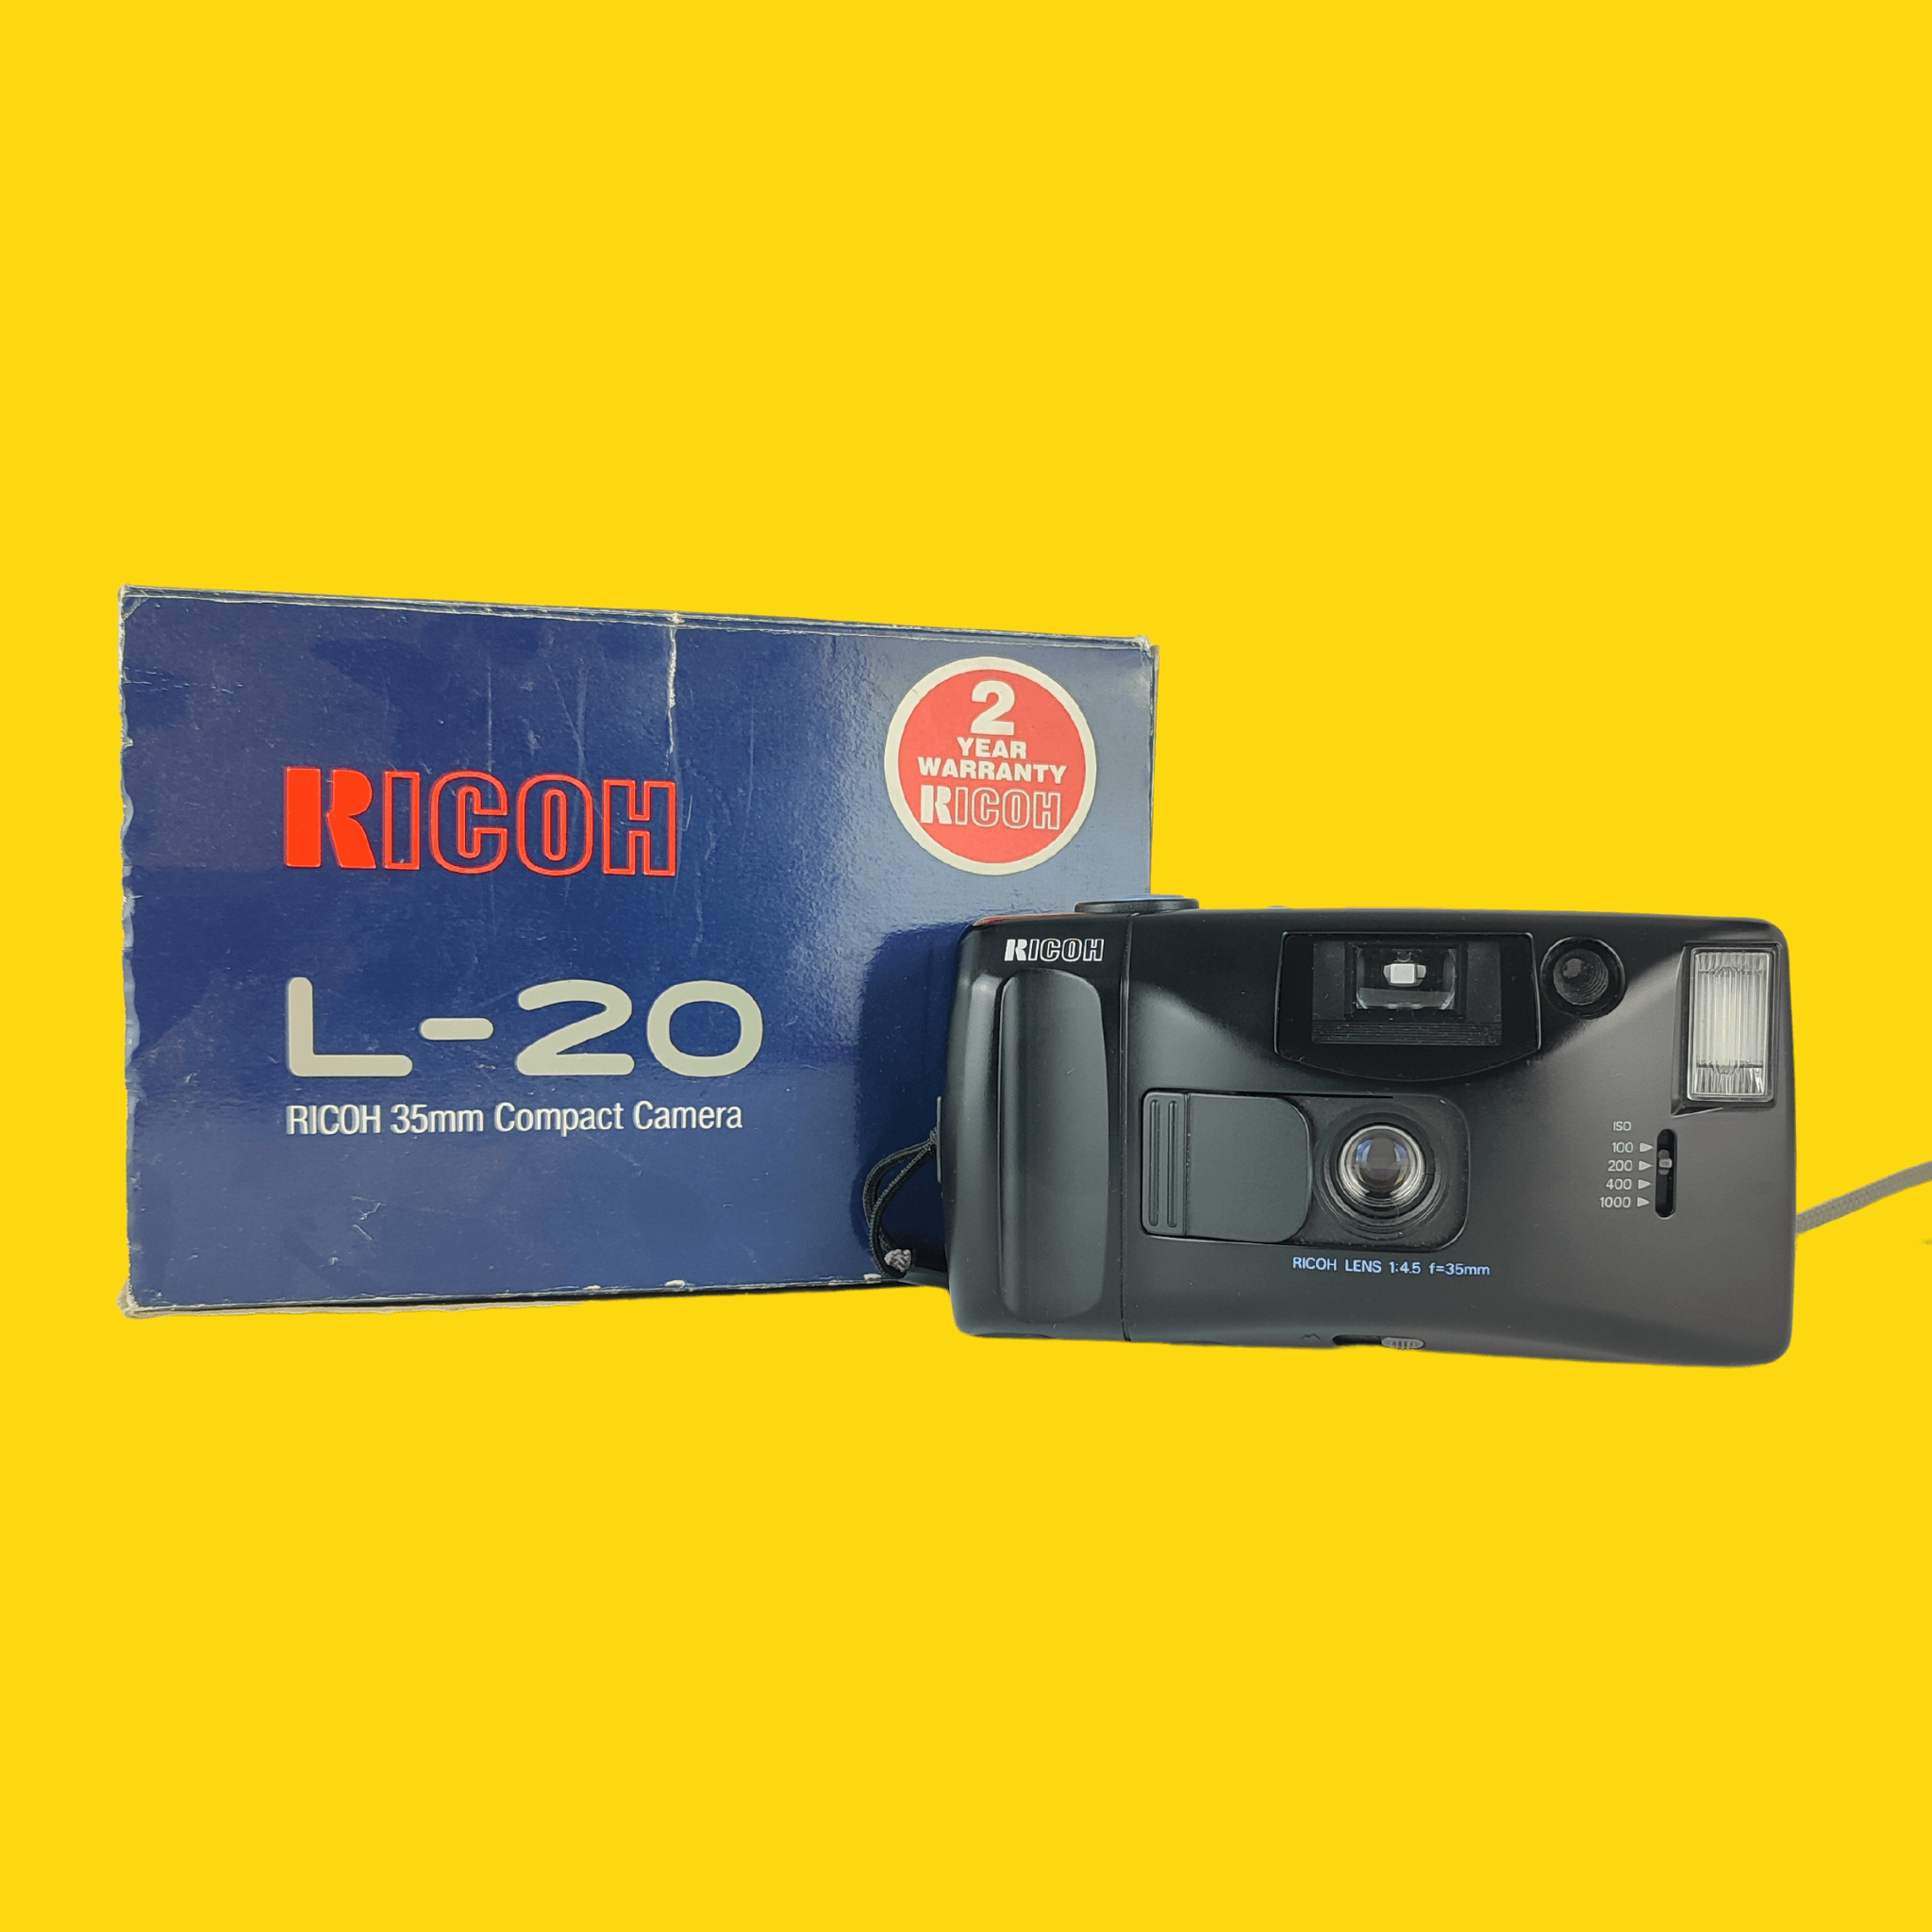 RICOH・カメラ・L-20 DATE・ジャンク 20210926 - フィルムカメラ